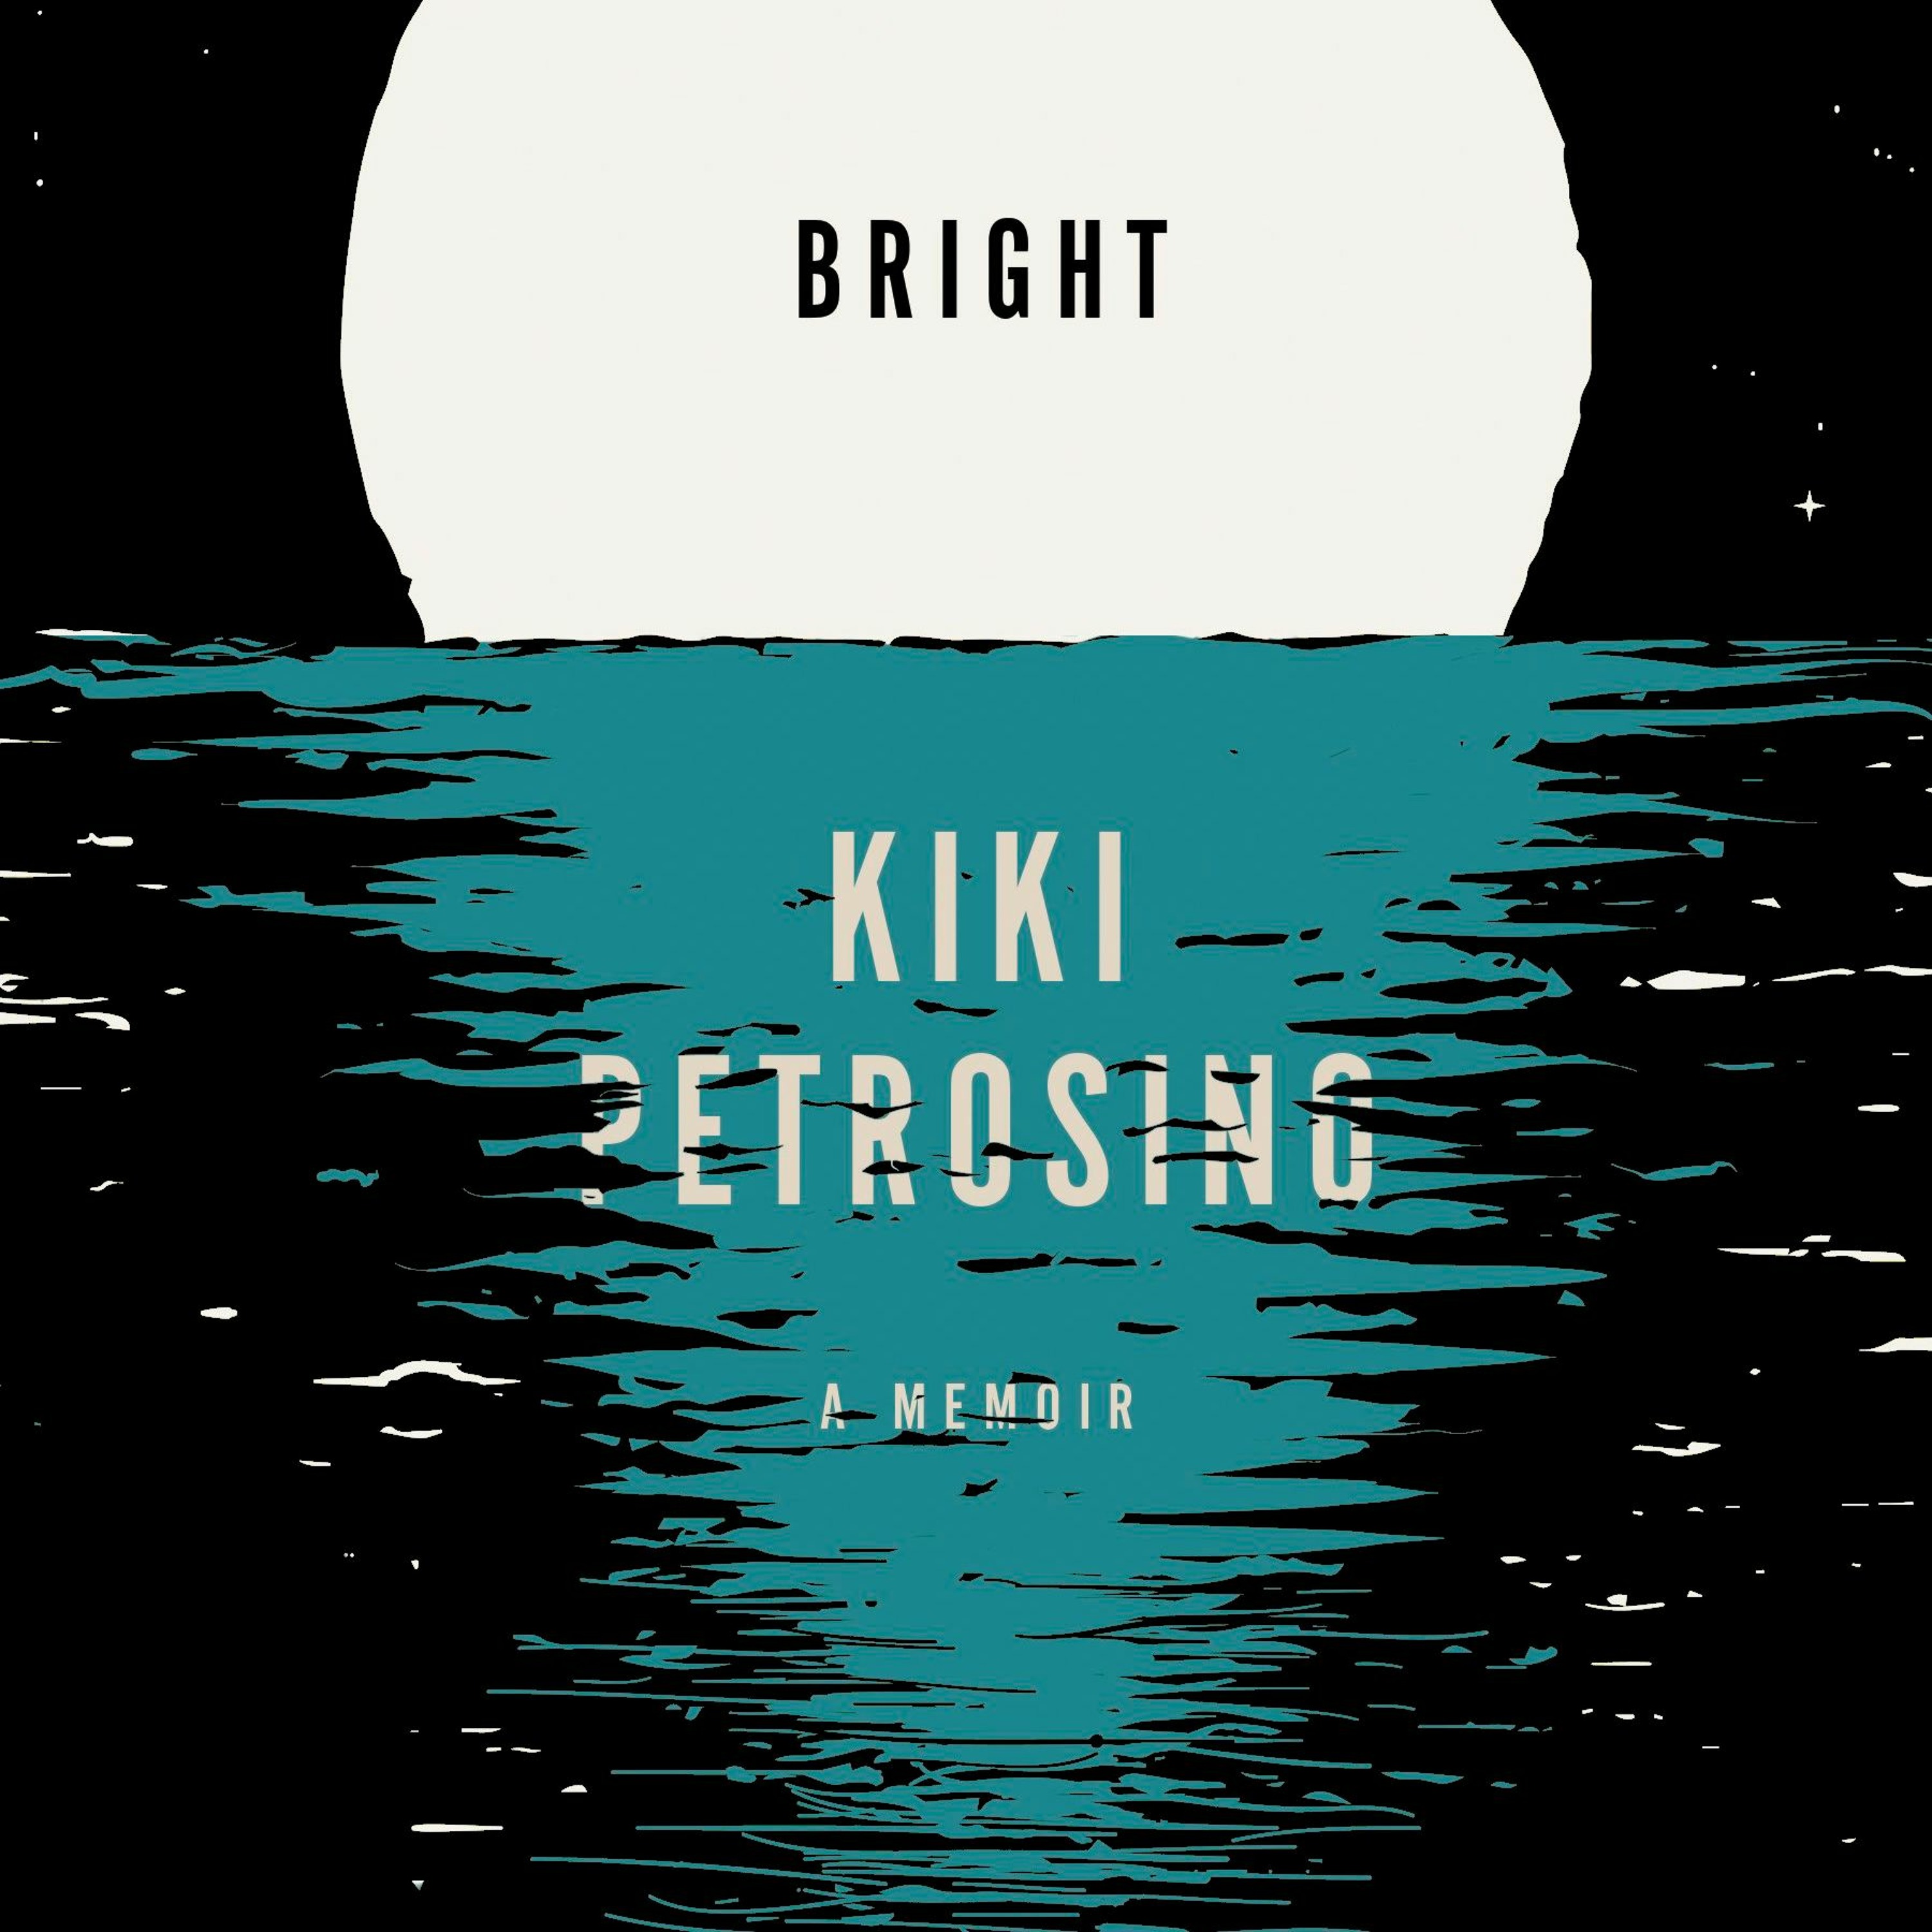 Bright by Kiki Petrosino